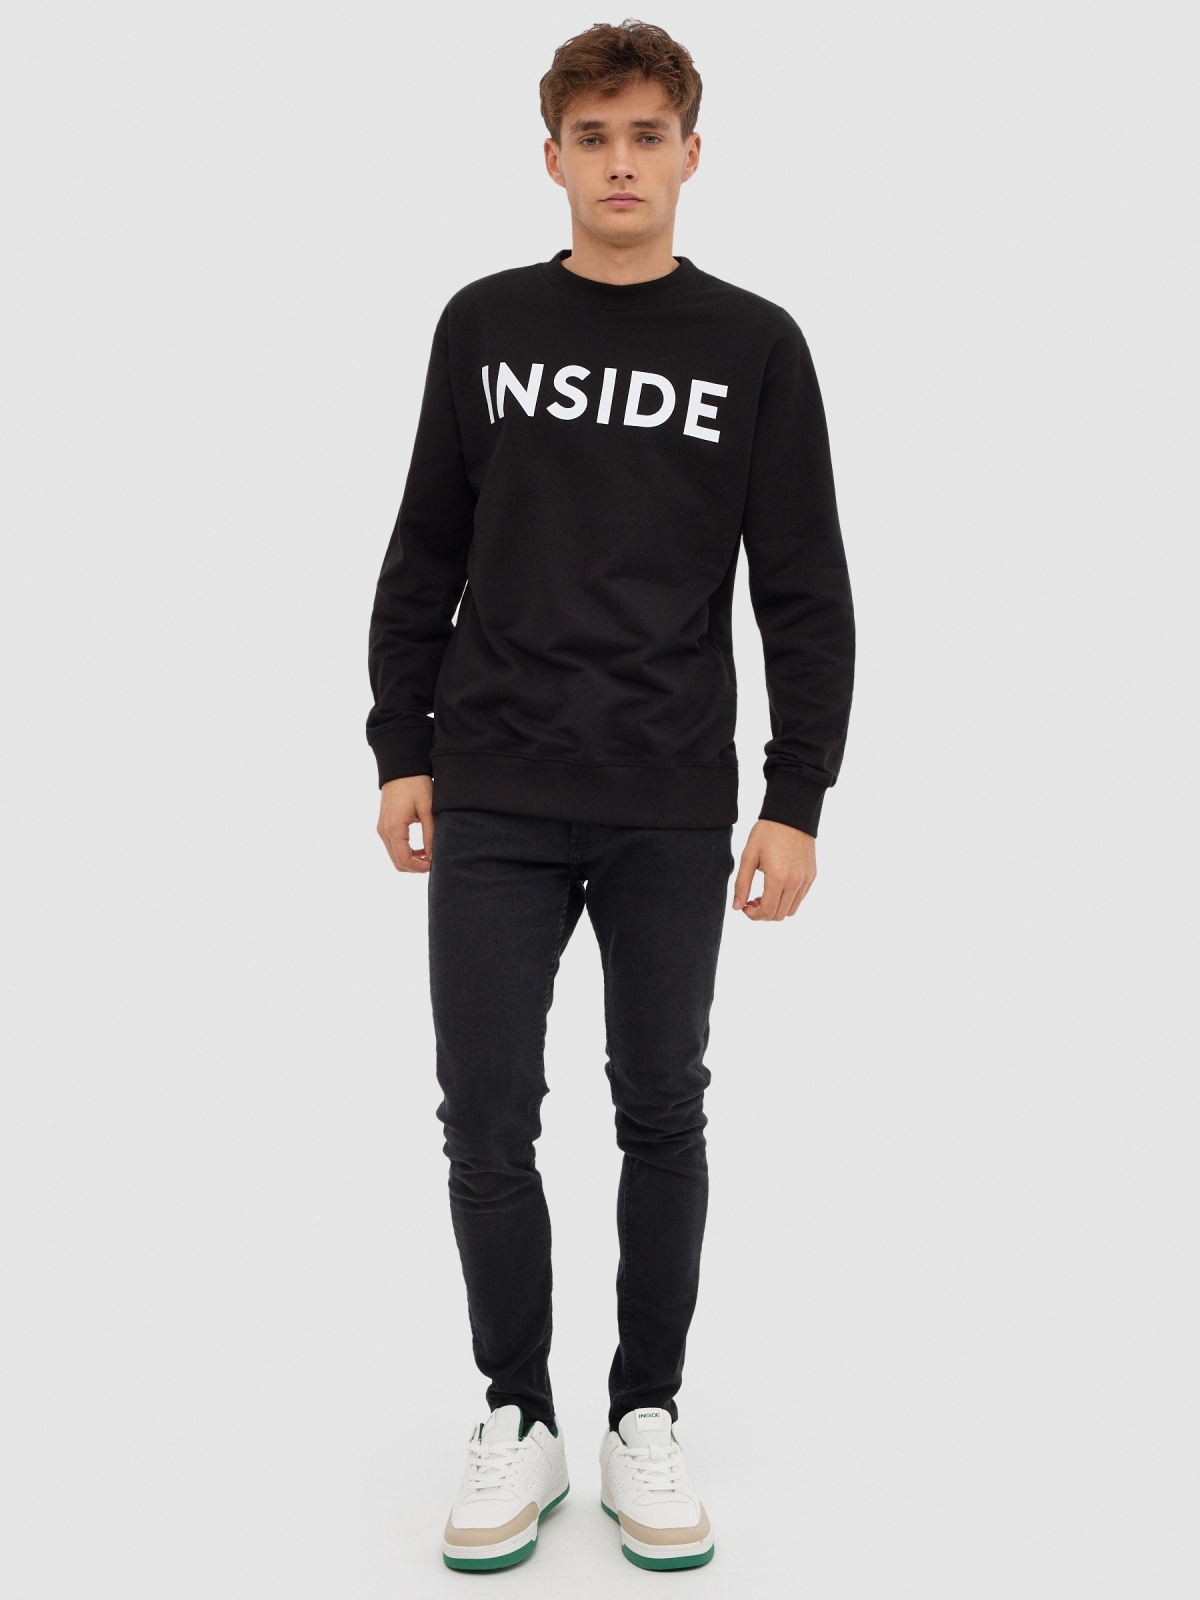 INSIDE hoodless sweatshirt black front view